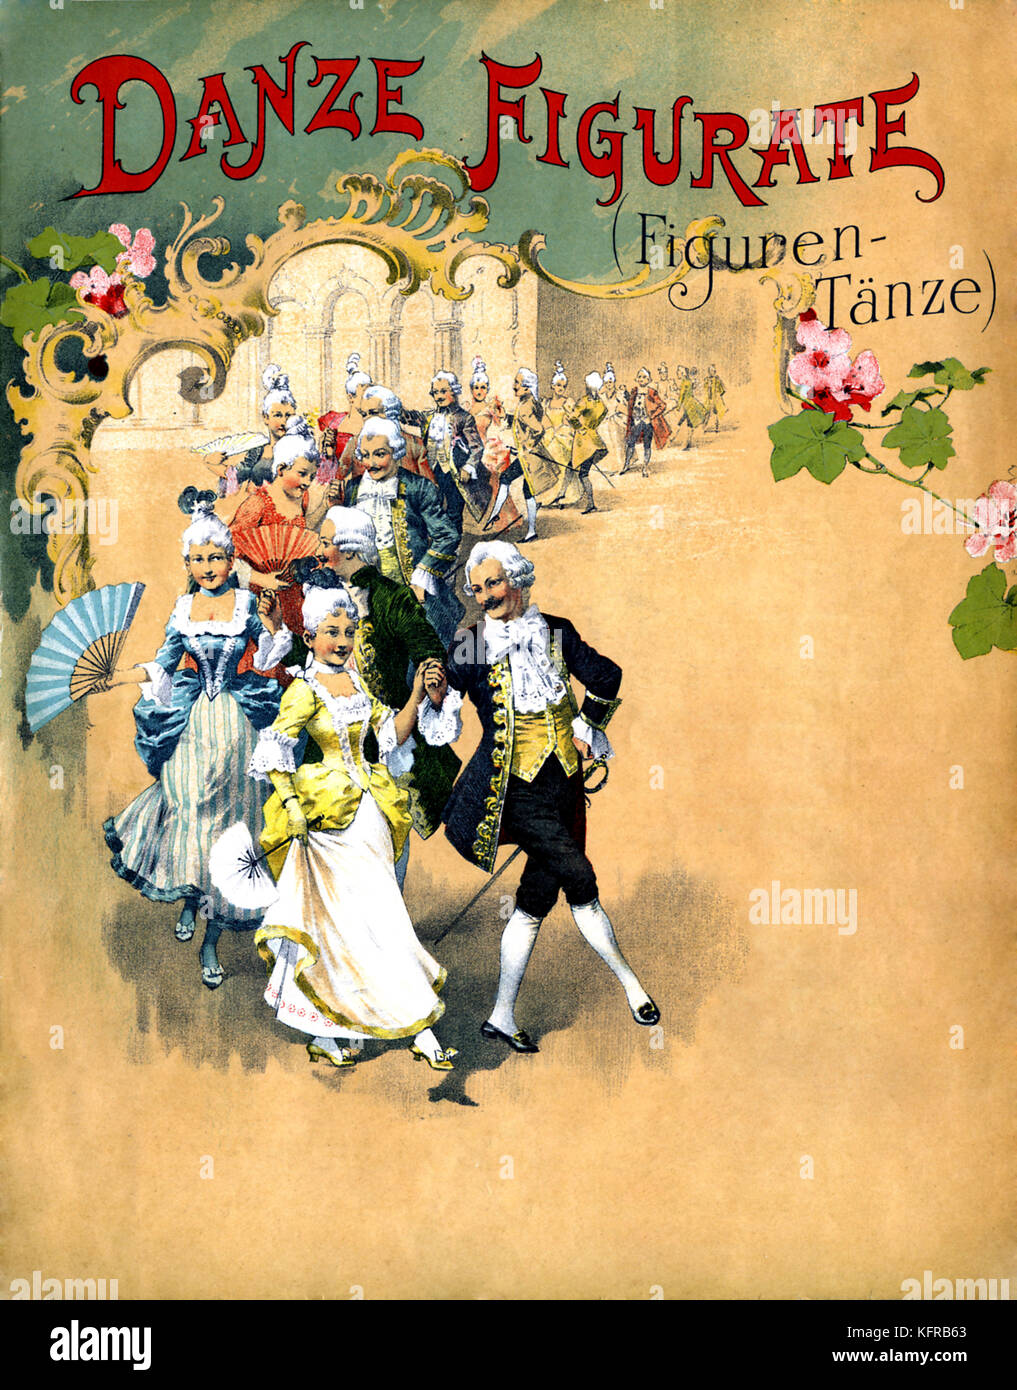 Danze Figurate (Figuren-Tanze) for pianoforte by Giuseppe Galimberti.  Dancers during the reign of French king Louis XV. Published Milan, Carisch & Janichen, 1896. 18th century ball scene. Stock Photo